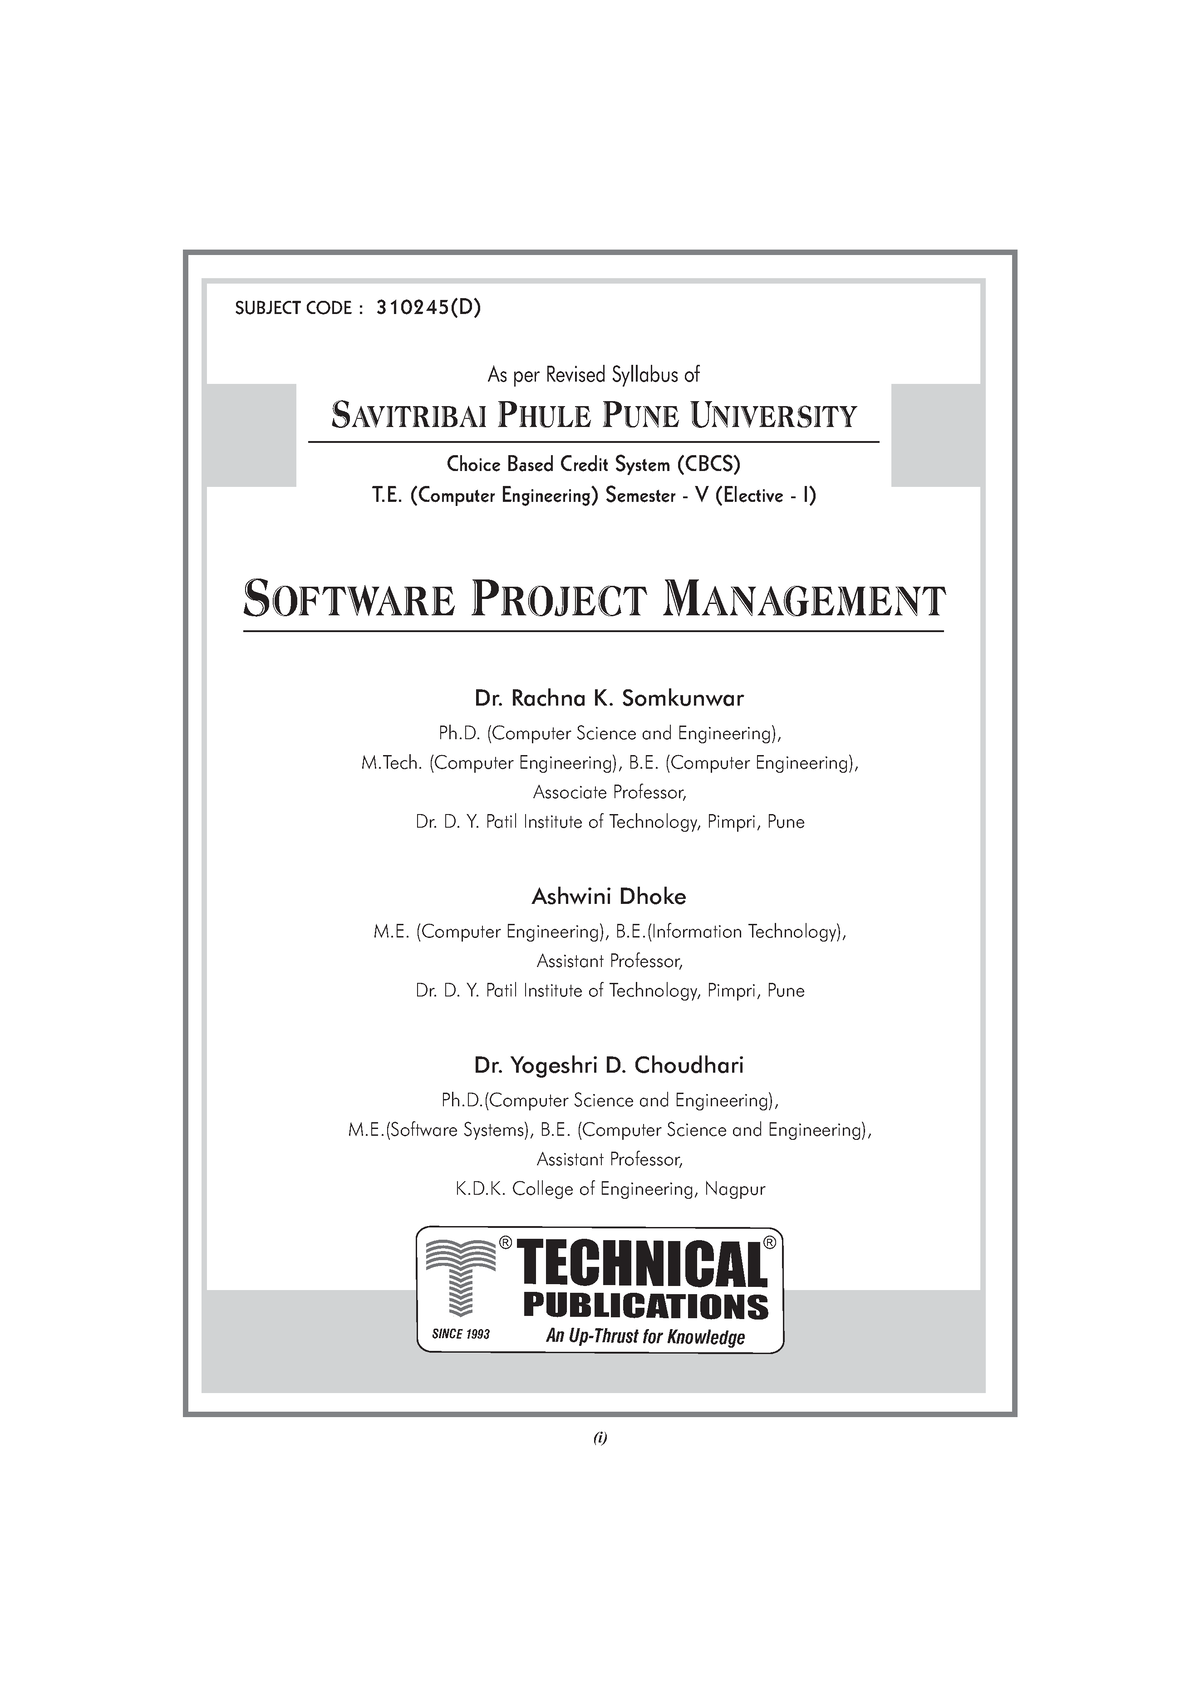 Software Project Management - (i) SUBJECT CODE : 310245(D) PUBLICATIONS ...